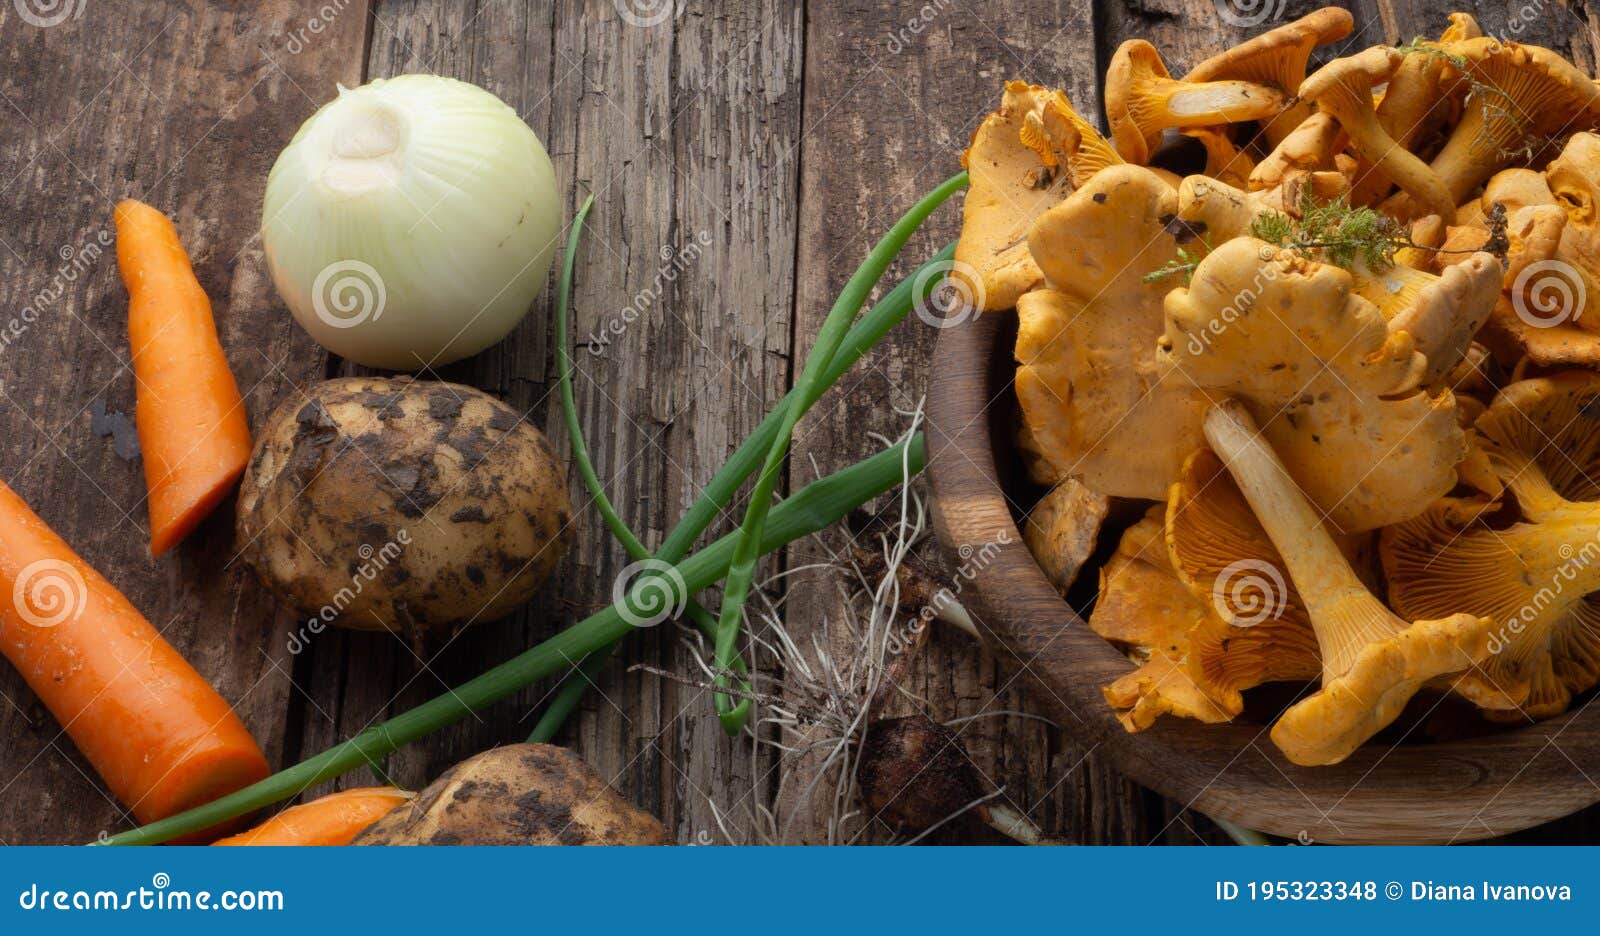 ingredientes for vegan chanterelles mushroom soup